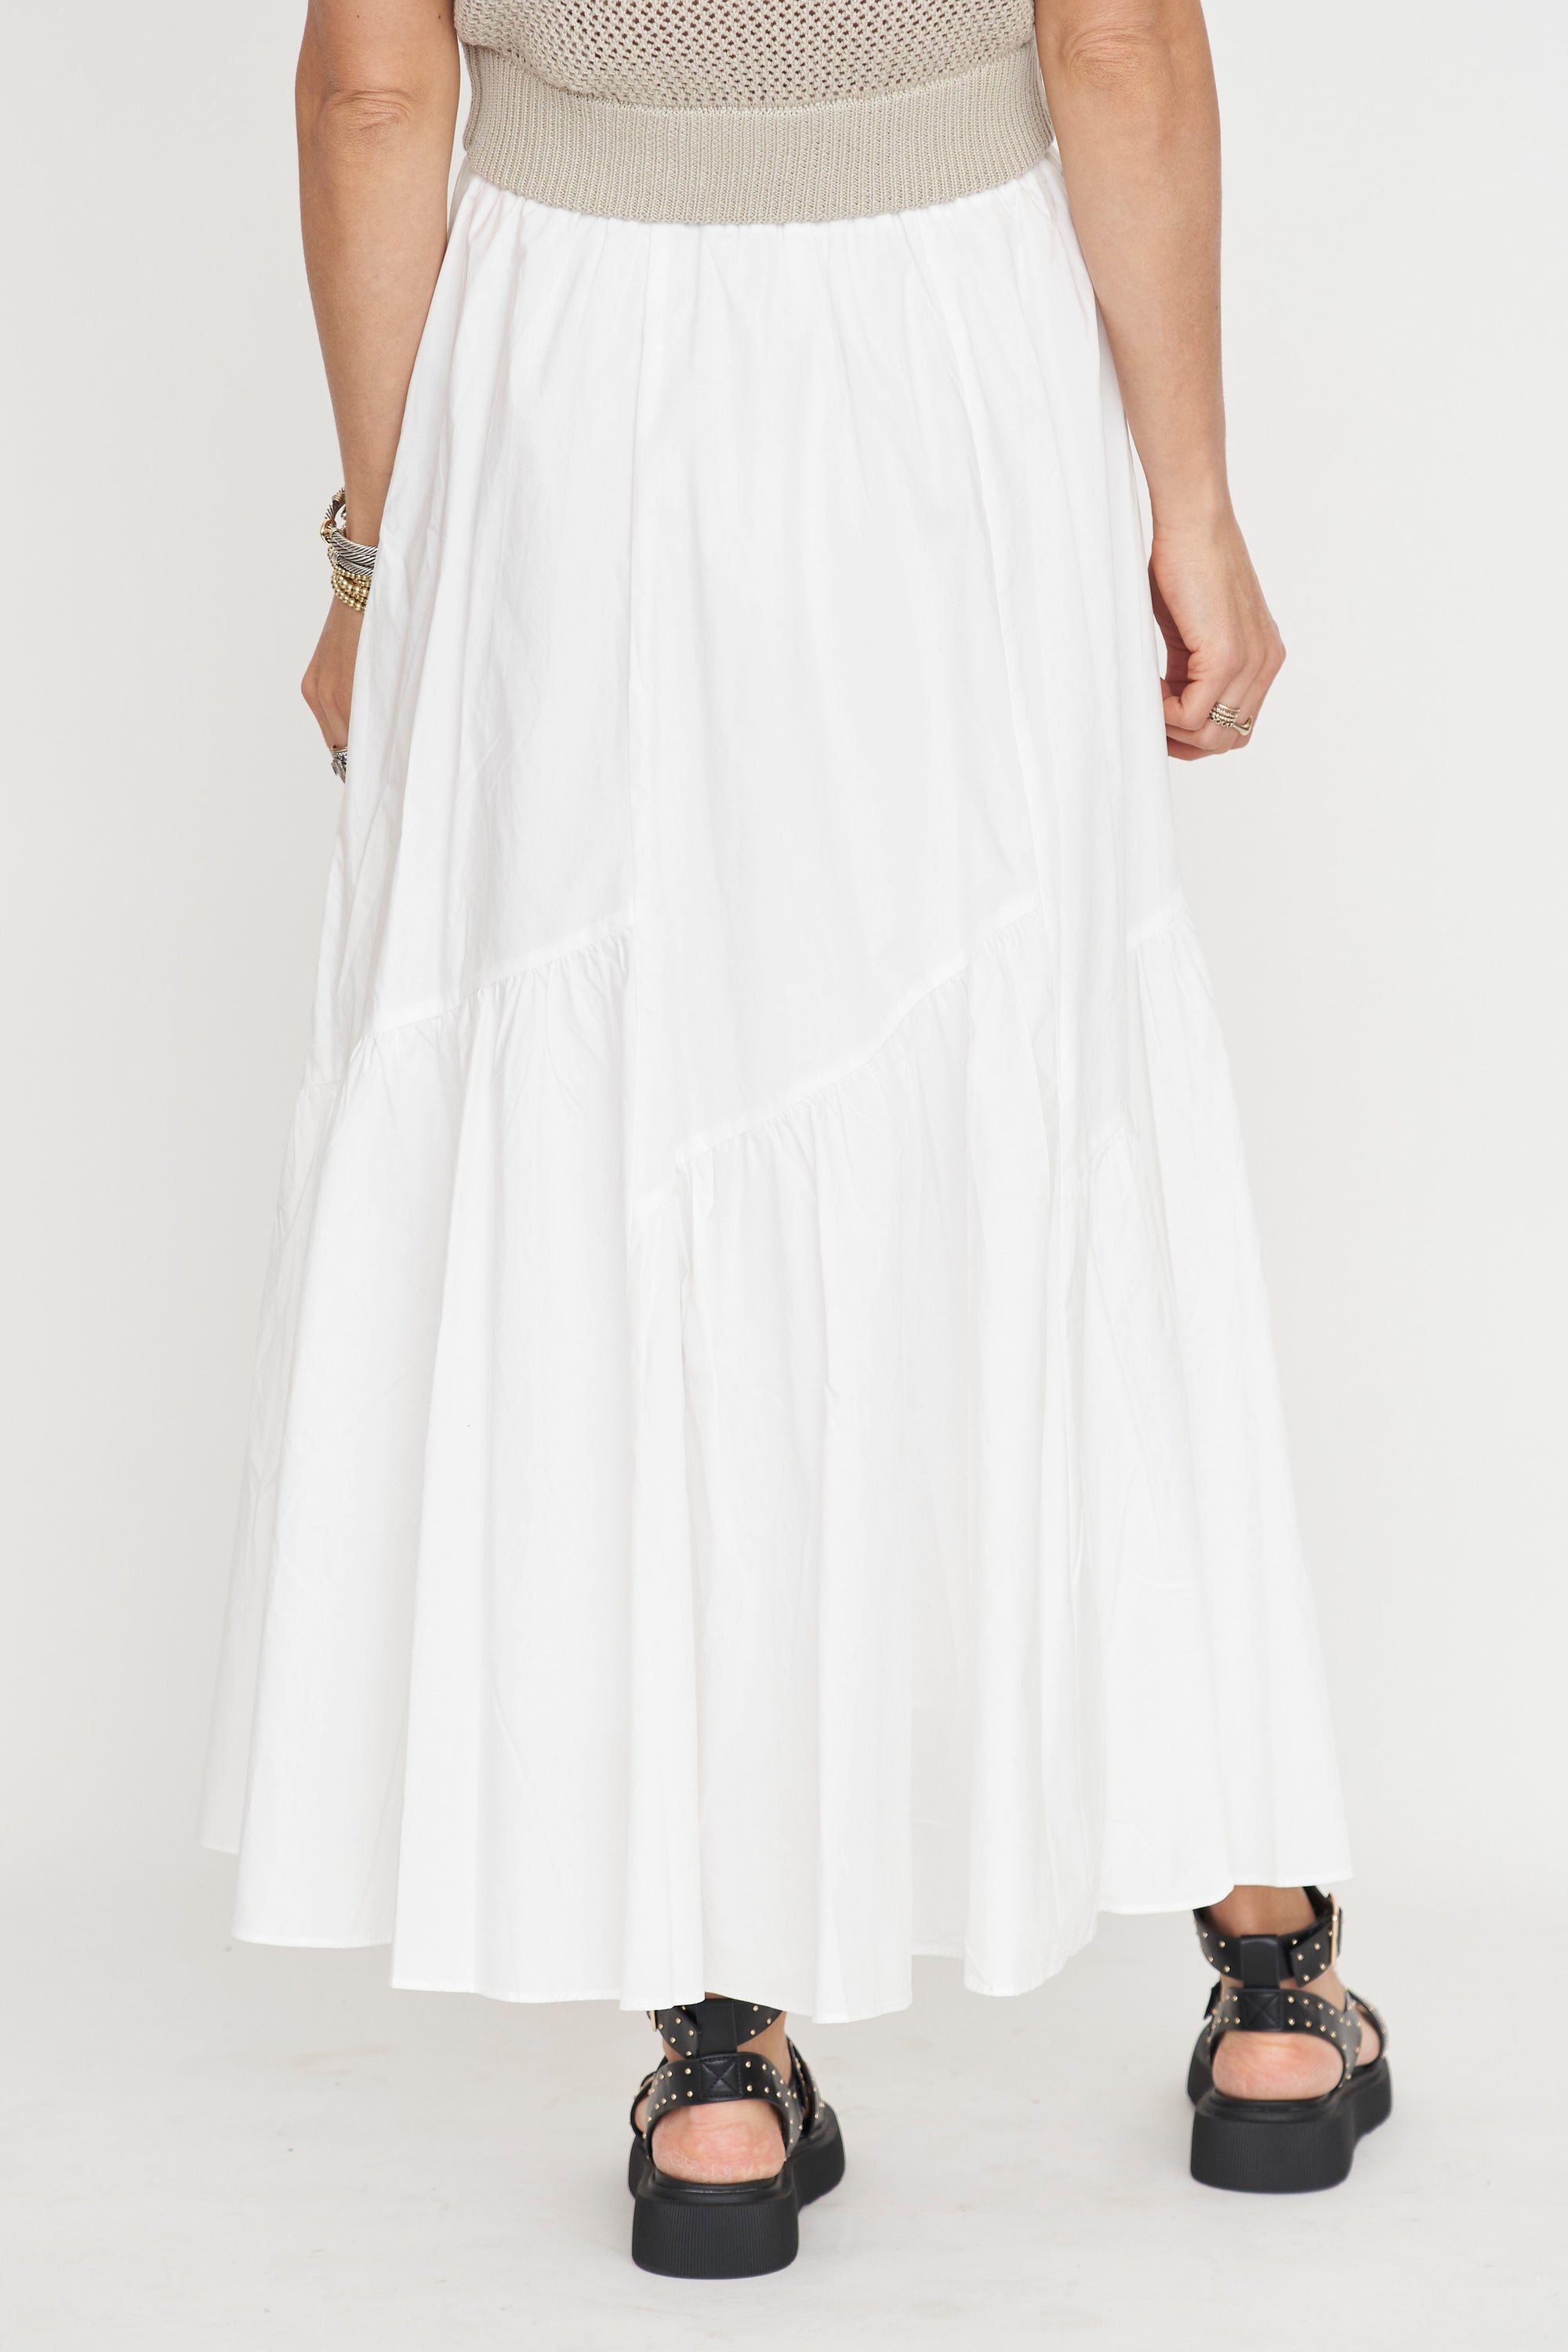 High Waist Ruffled Flare Skirt in White